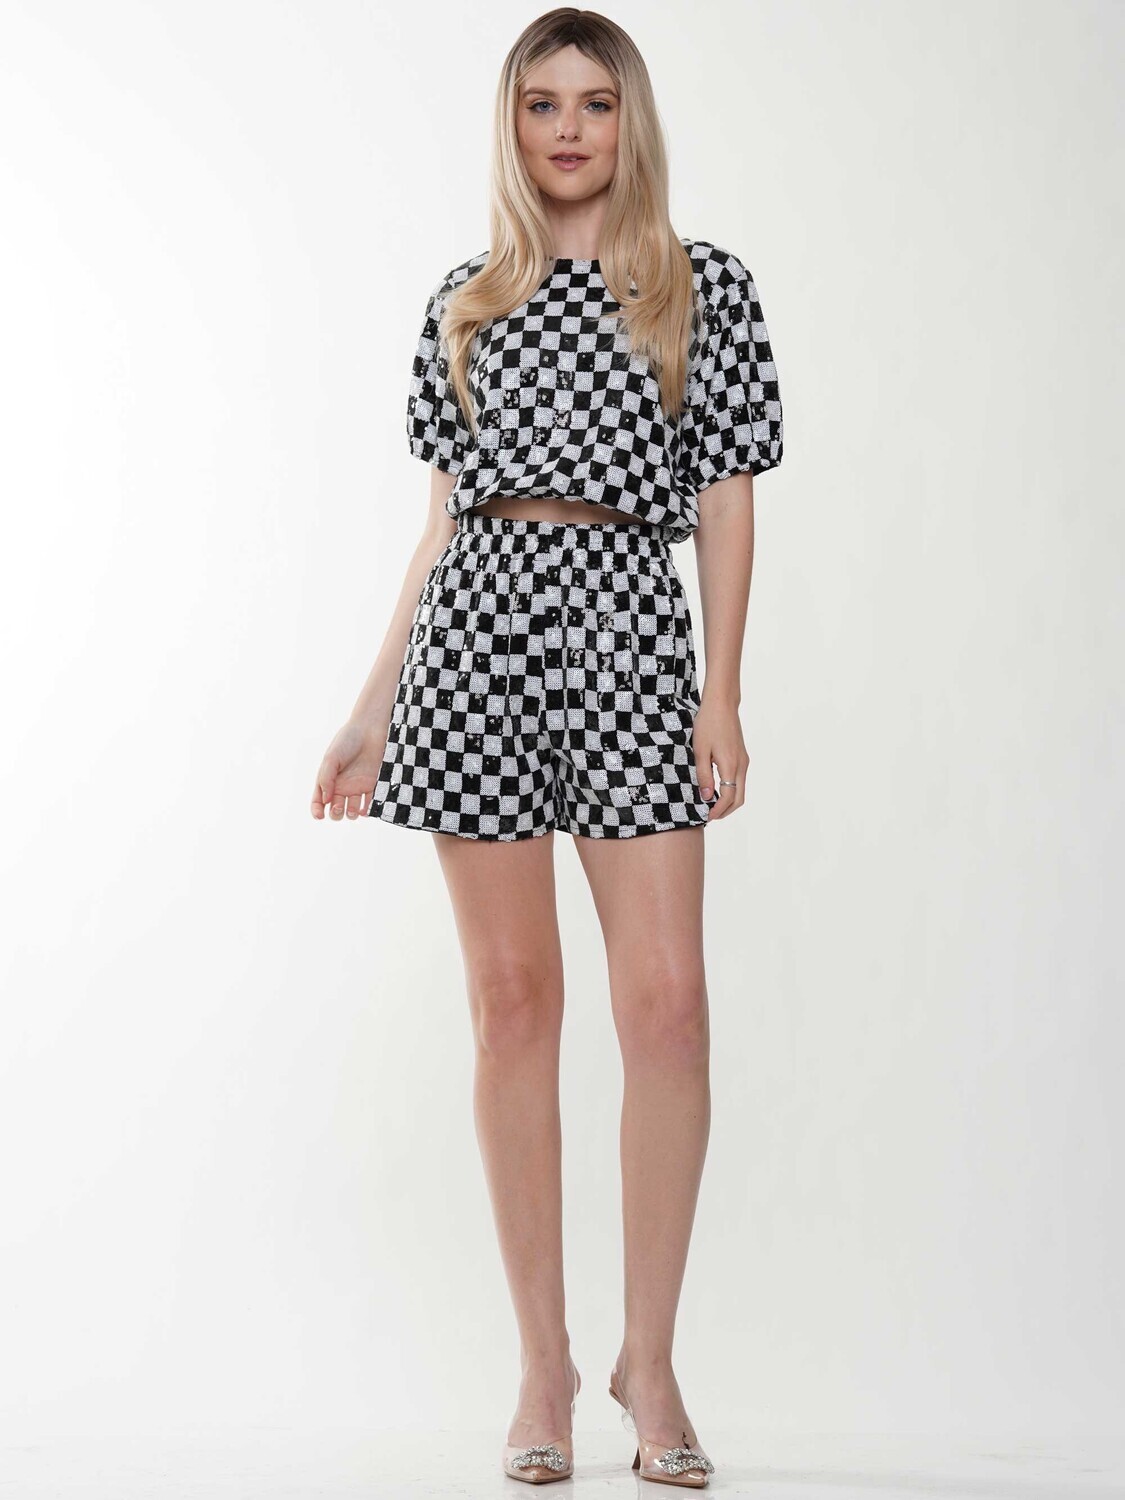 Checkered Black/Wht Sequin Short